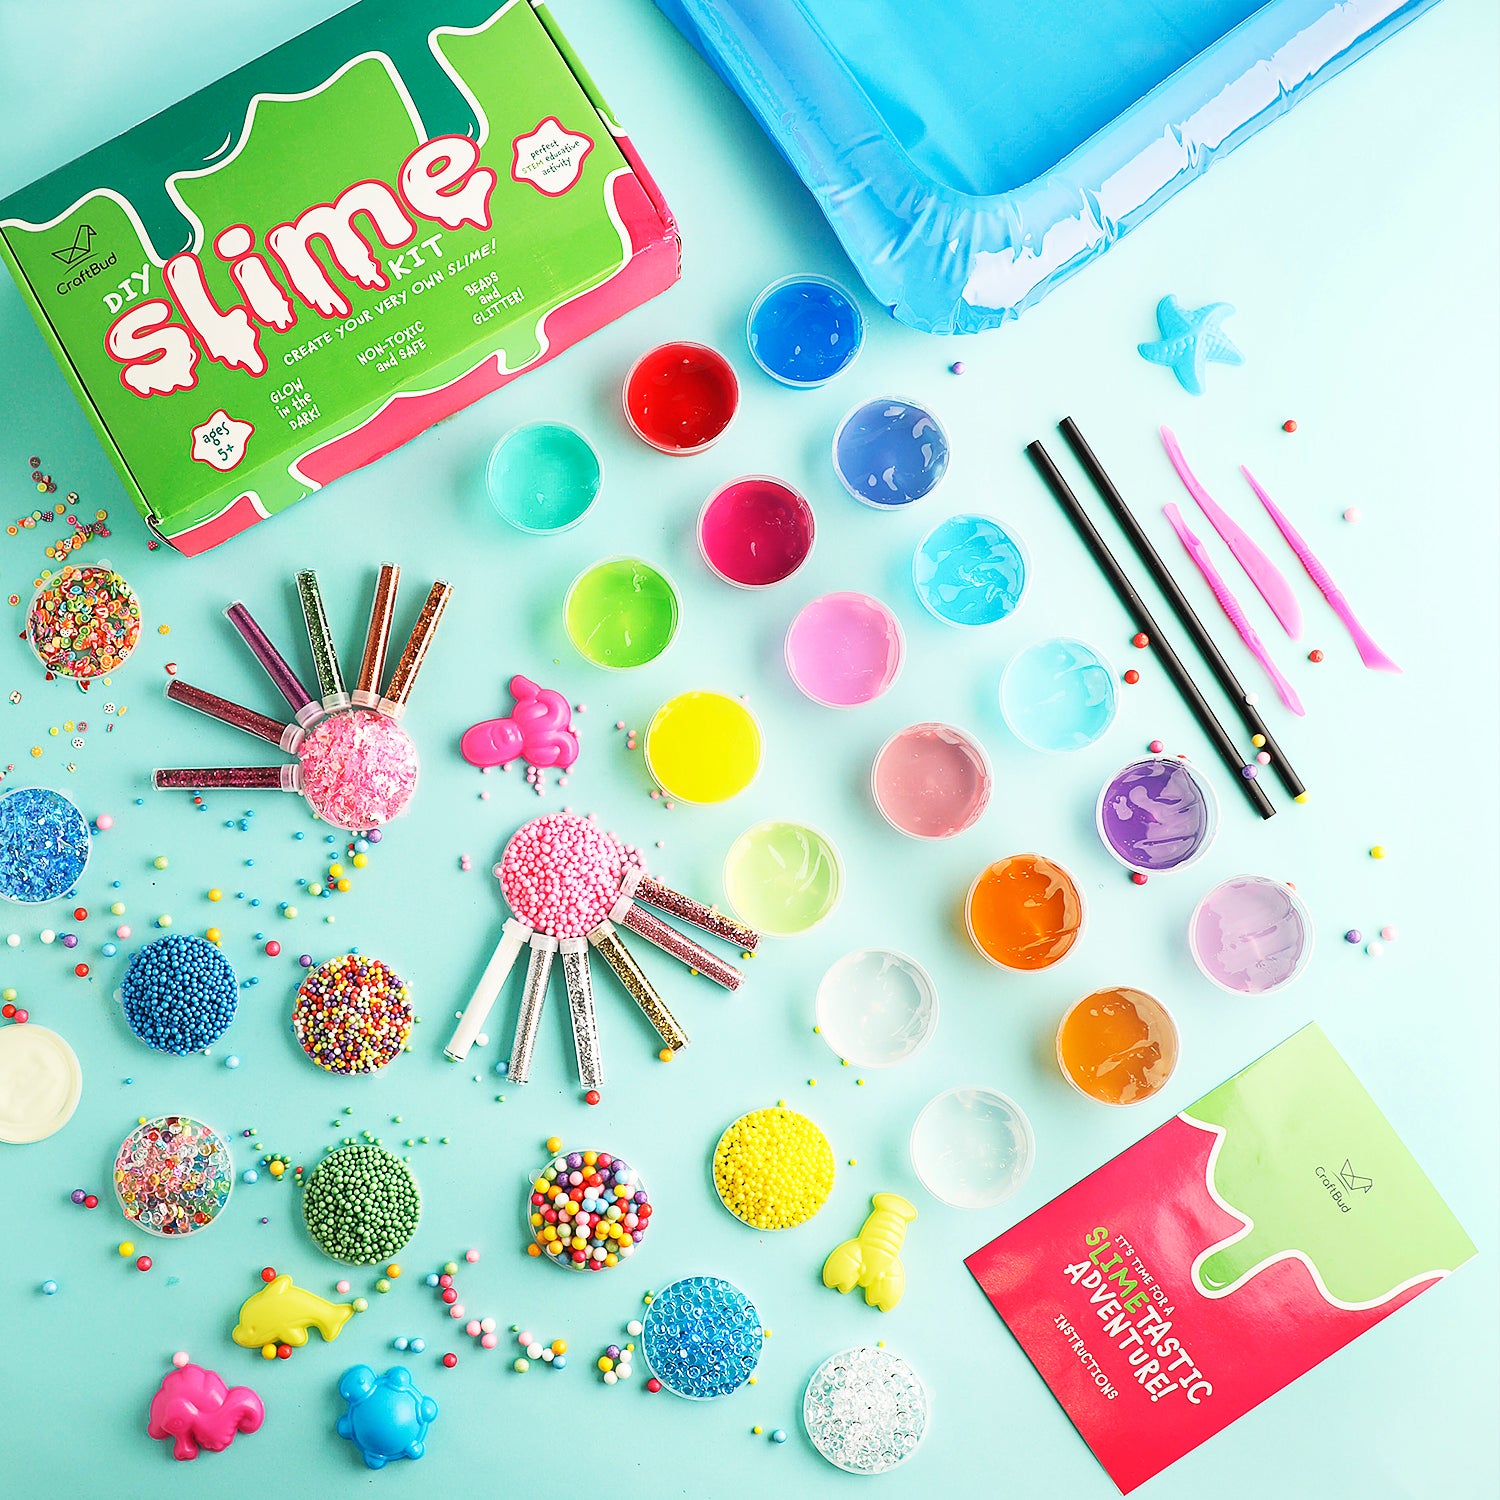 DIY Slime Kit Supplies Kids - Ready Slimes Making Kits Craft for